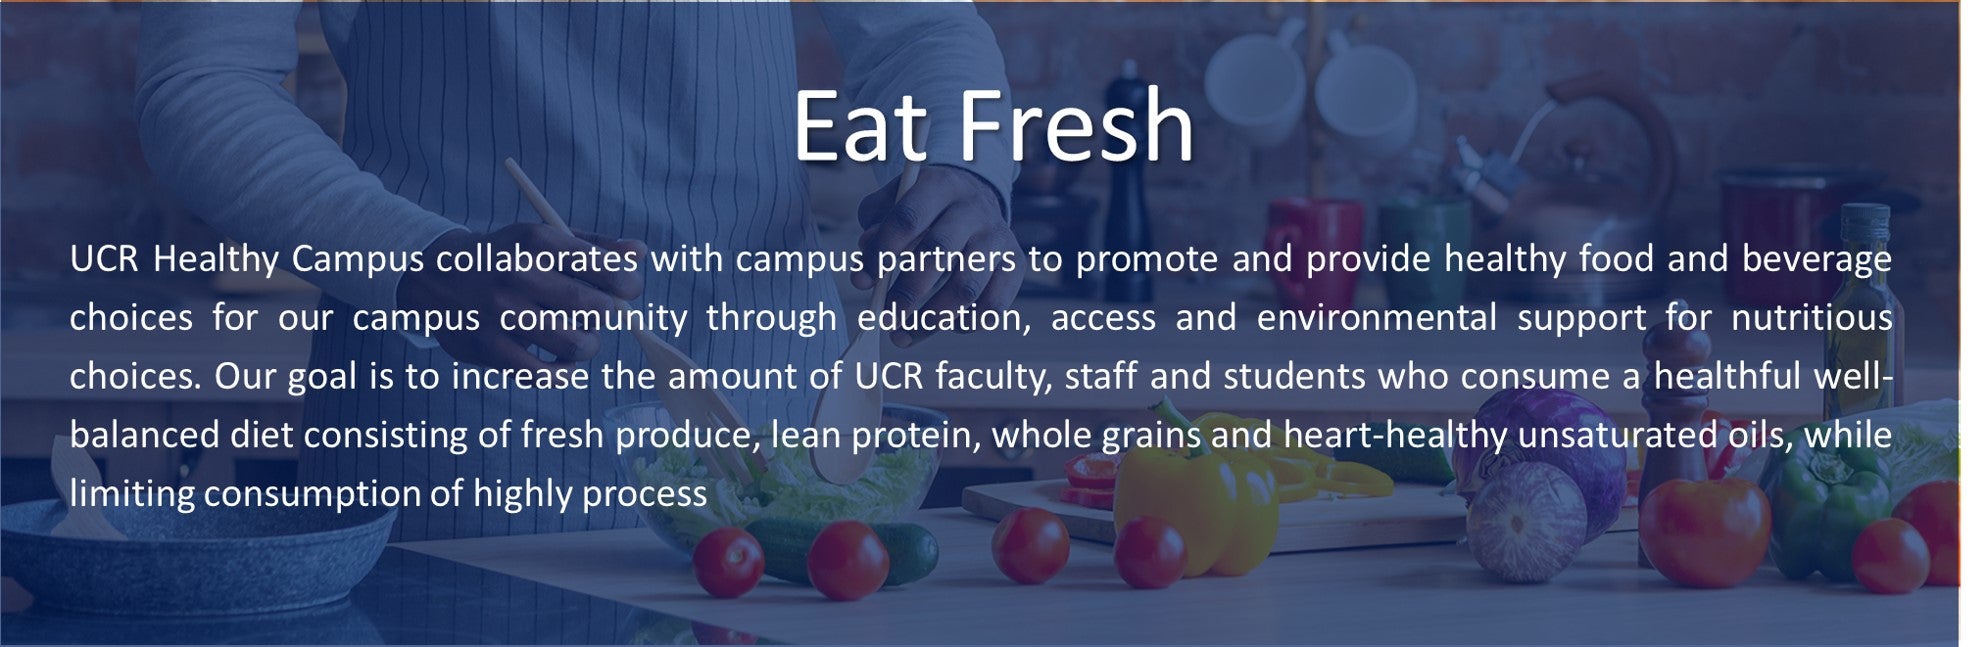 Eat Fresh banner